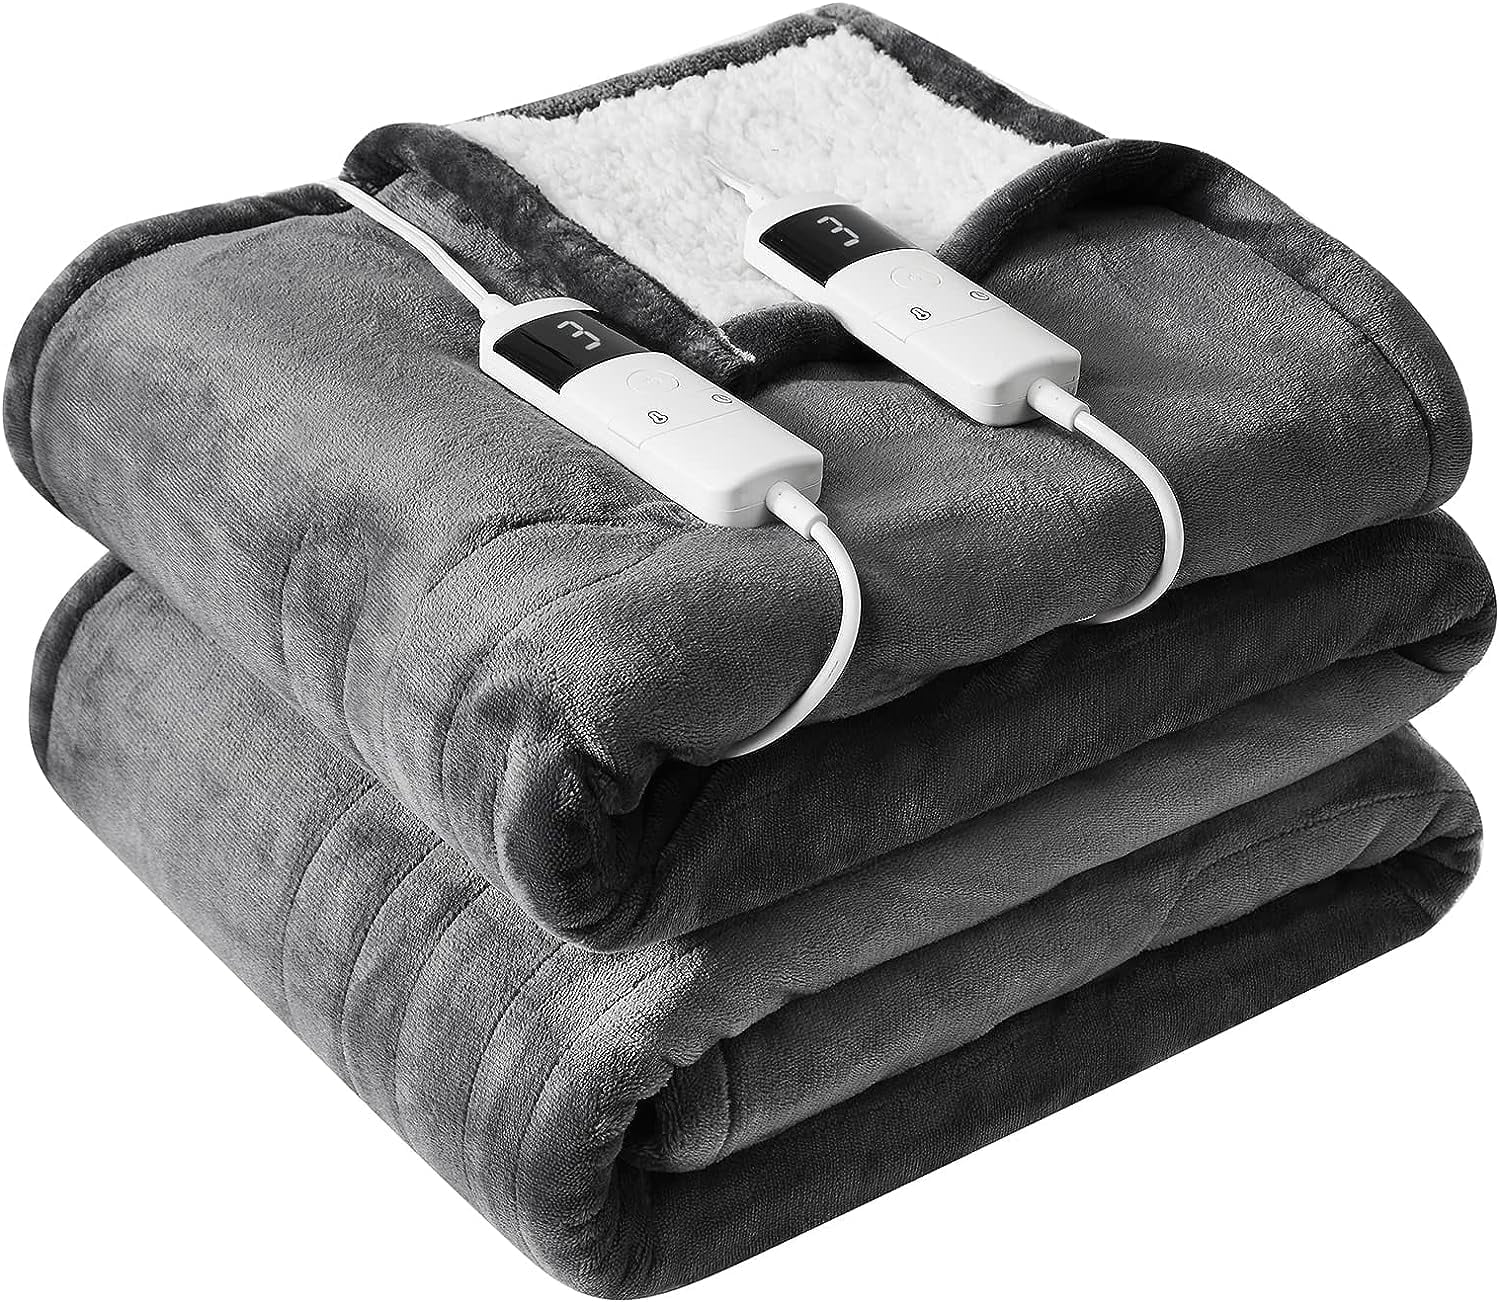 New Launch] Bearhug Electric Blanket Queen Size 84 x 90, Dual